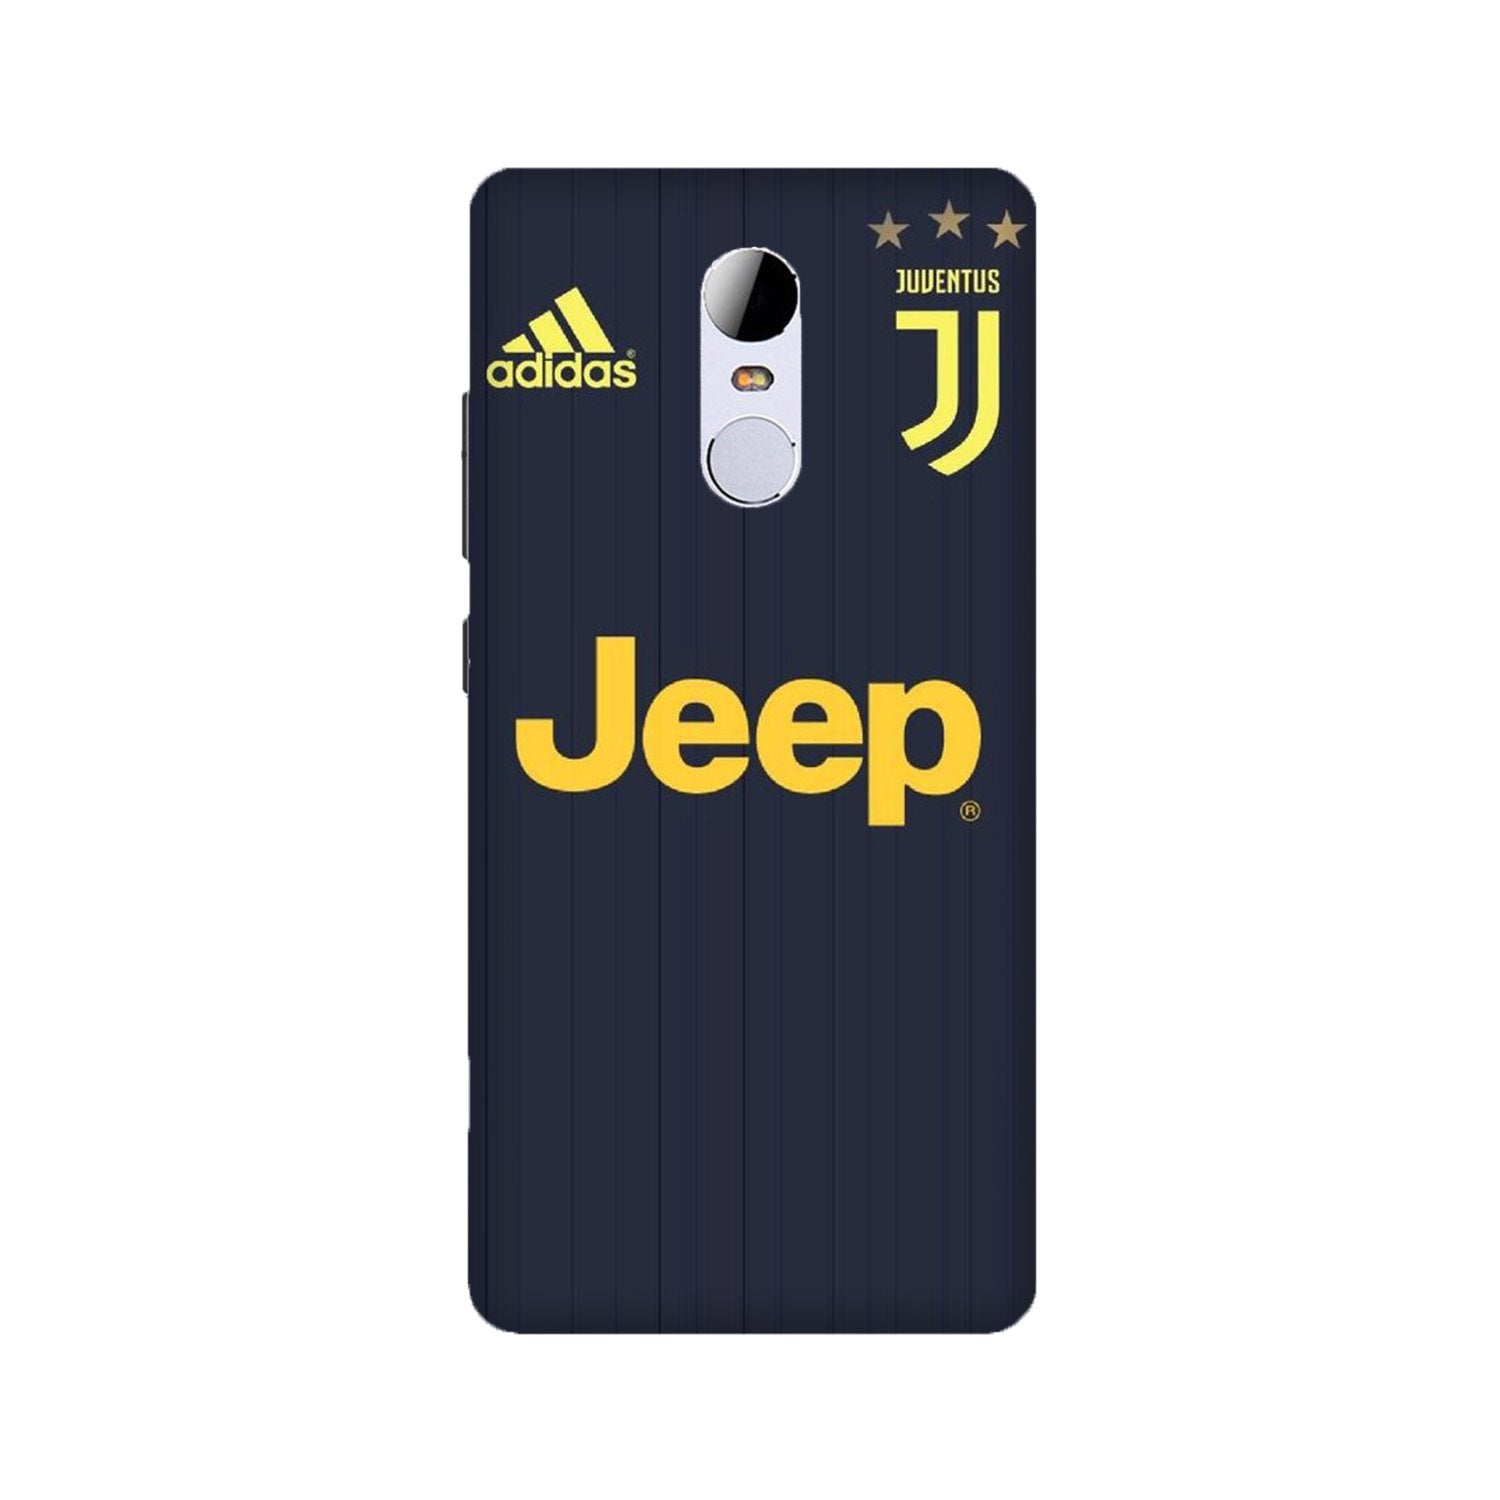 Jeep Juventus Case for Redmi Note 4(Design - 161)